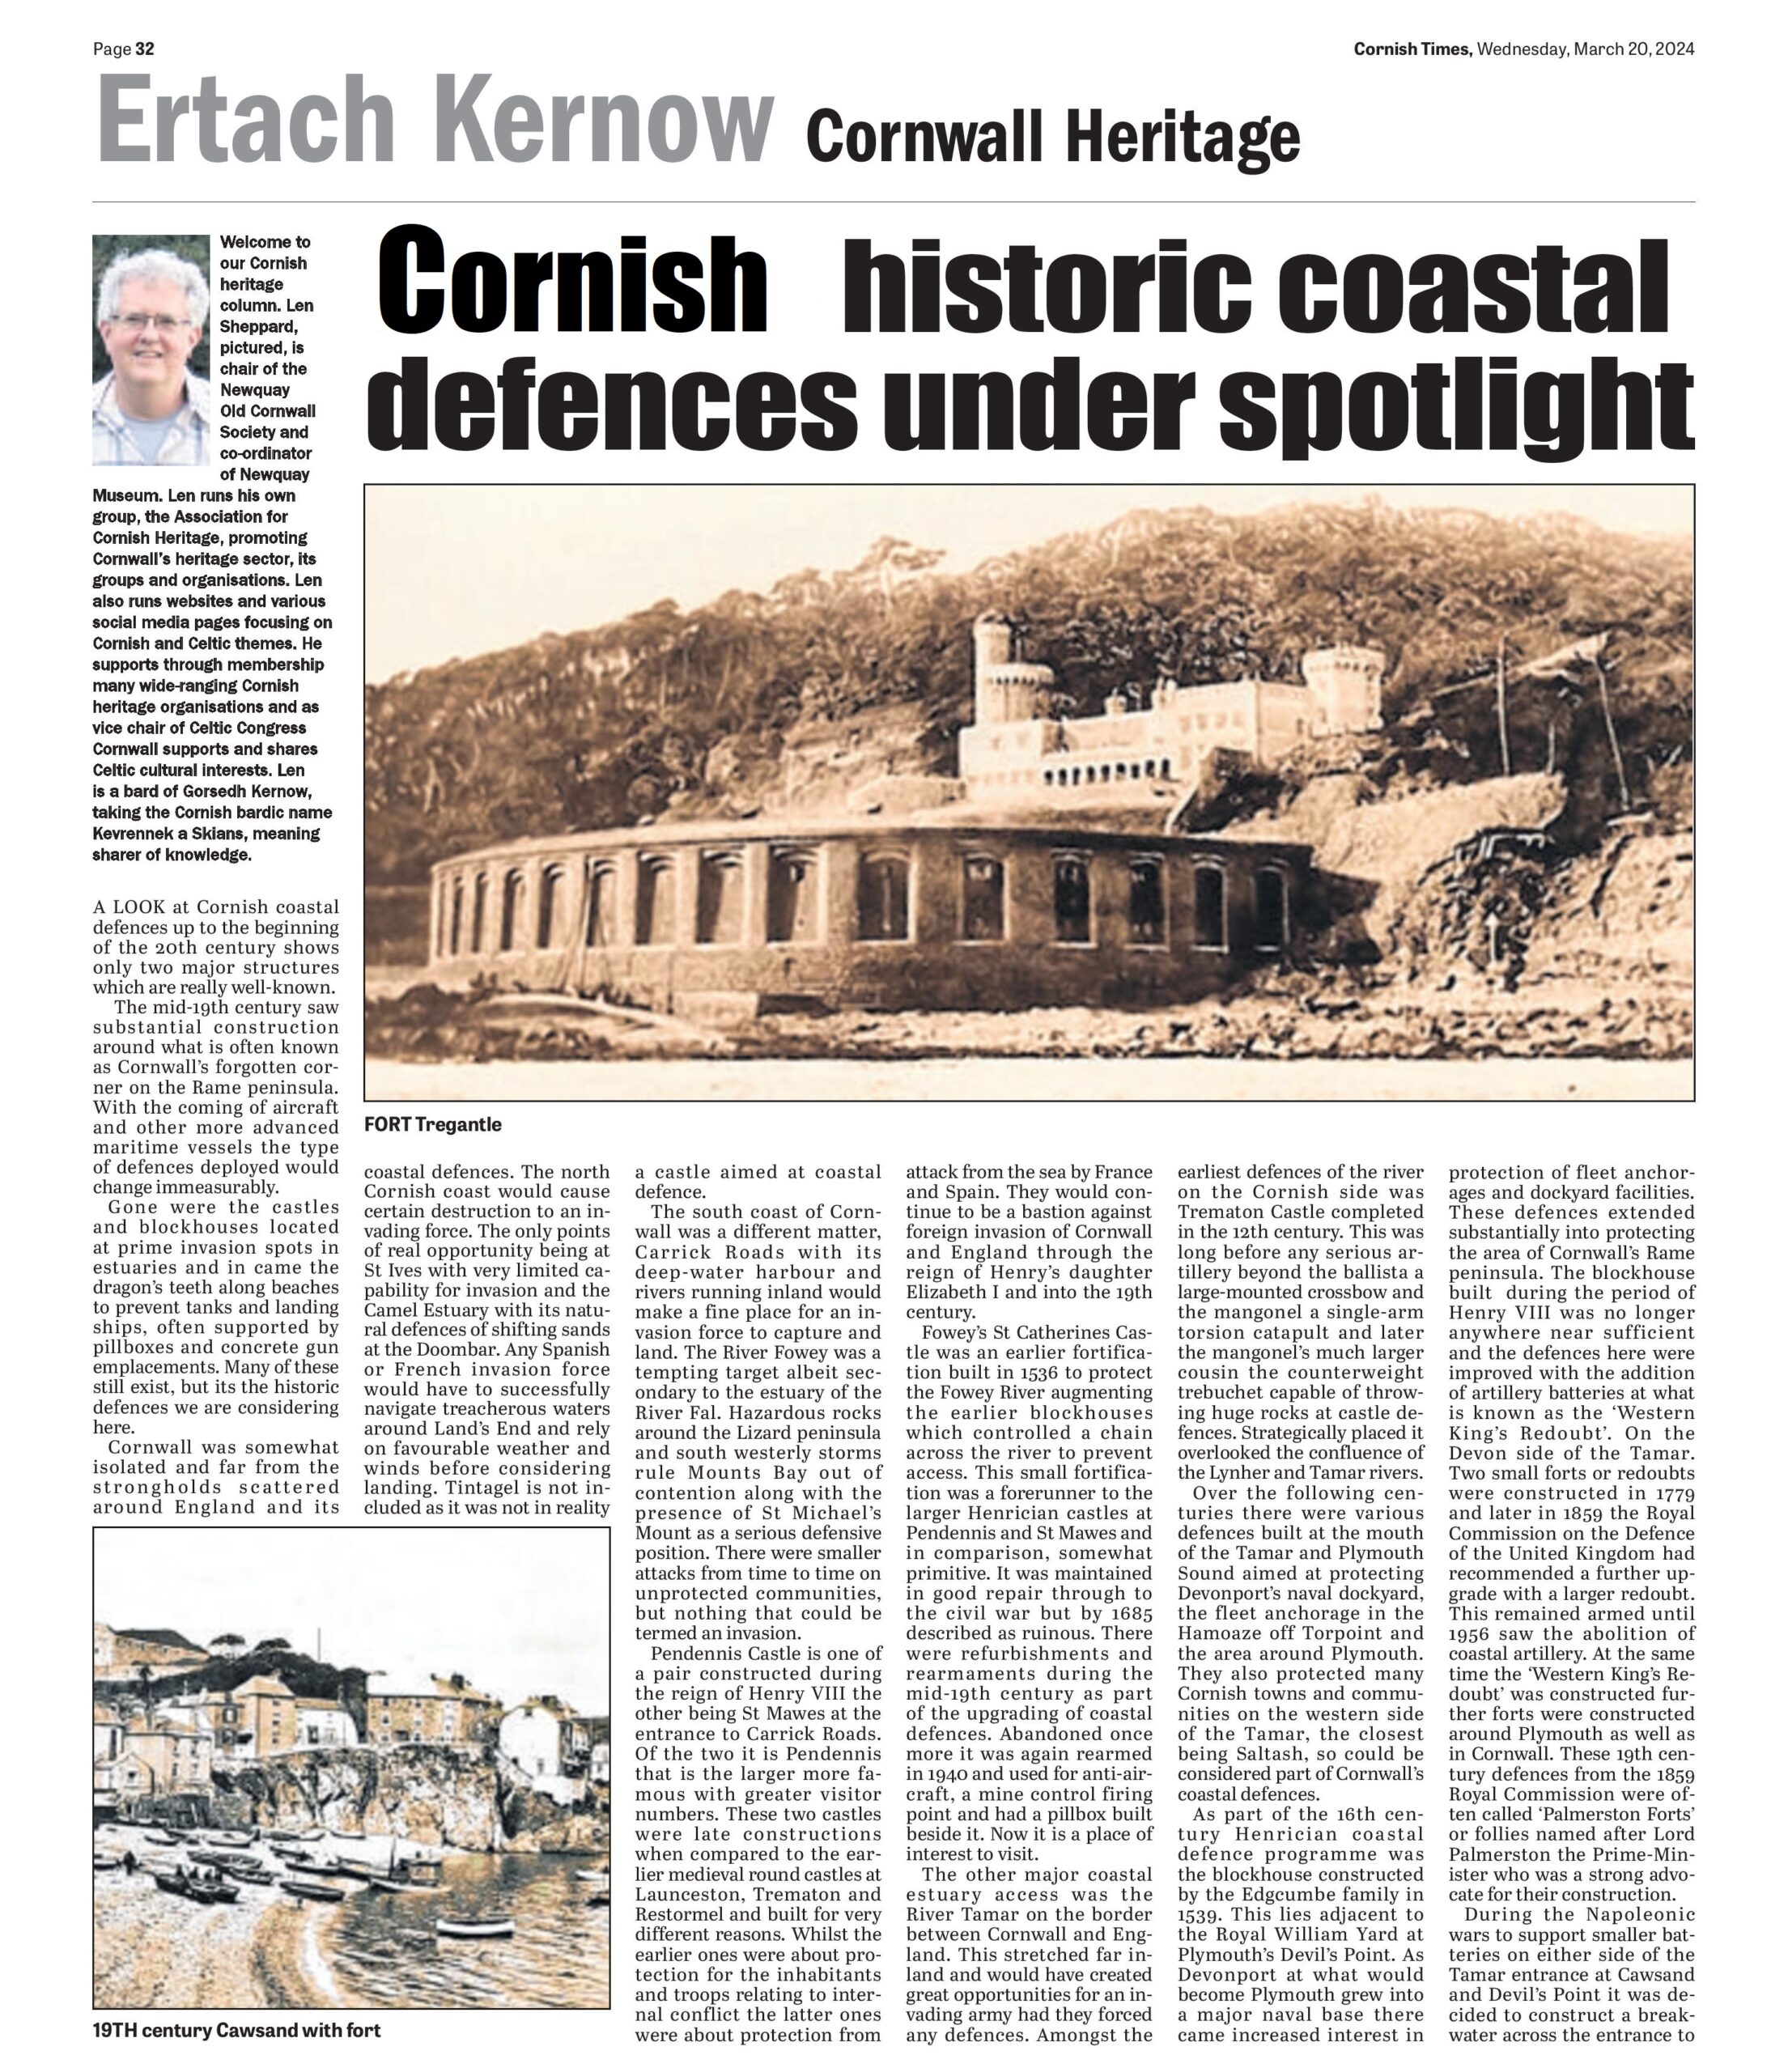 Cornish historic coastal defences under spotlight